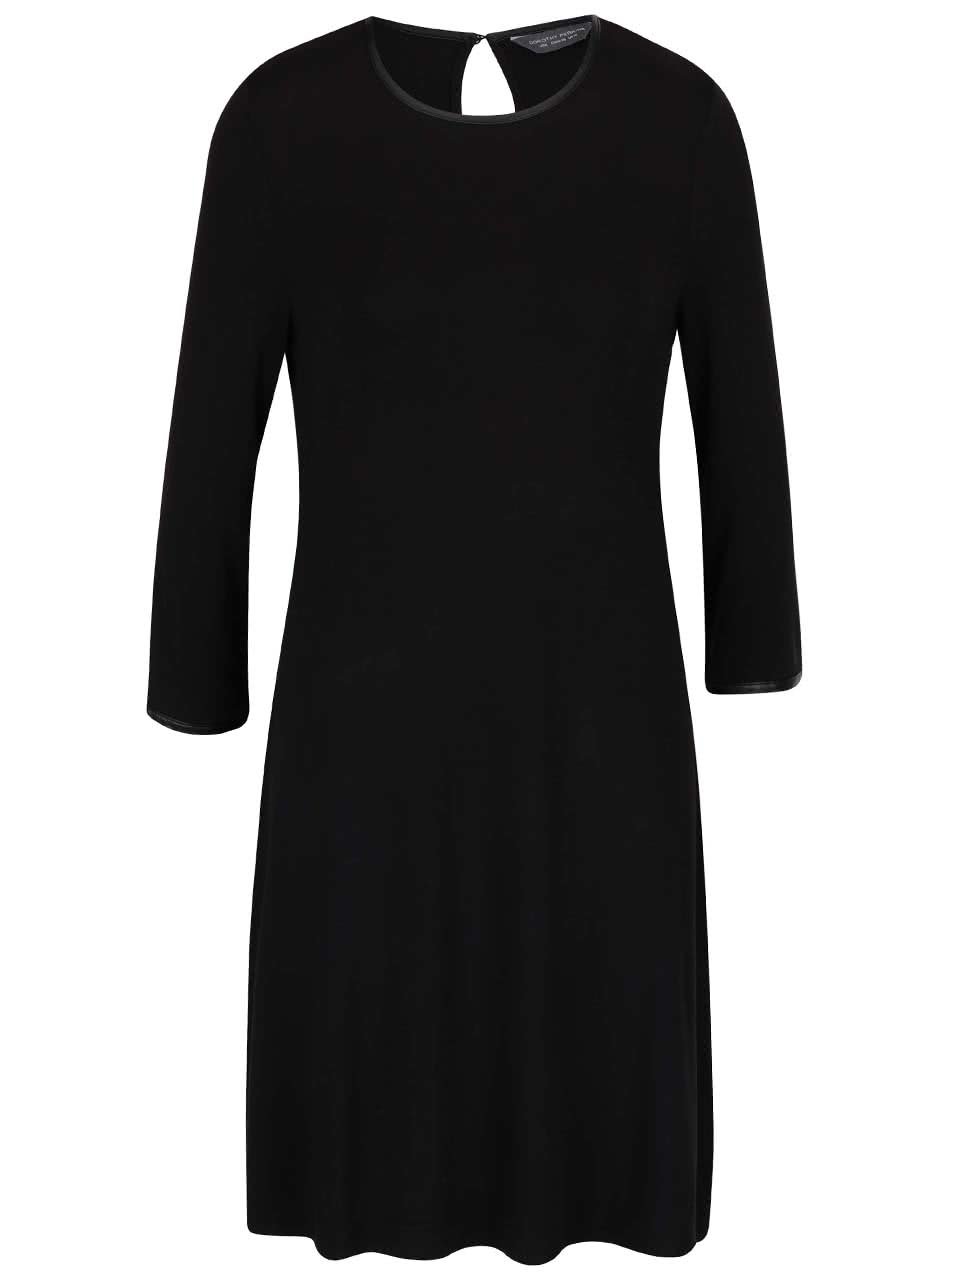 Černé šaty s 3/4 rukávy Dorothy Perkins